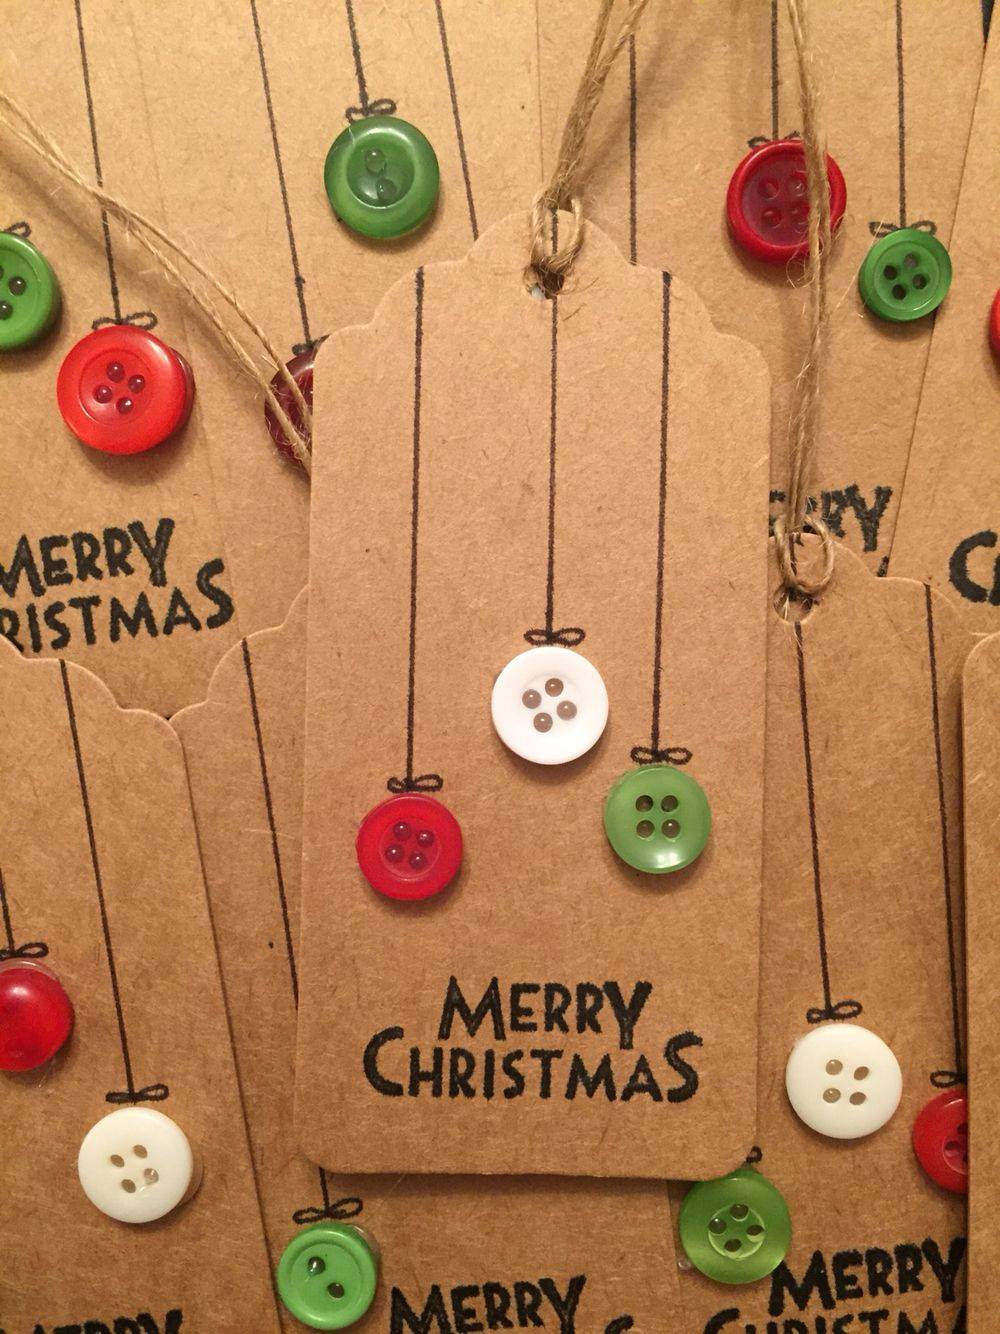 Felicitación navideña hecha con una etiqueta de cartón decorada con botones.